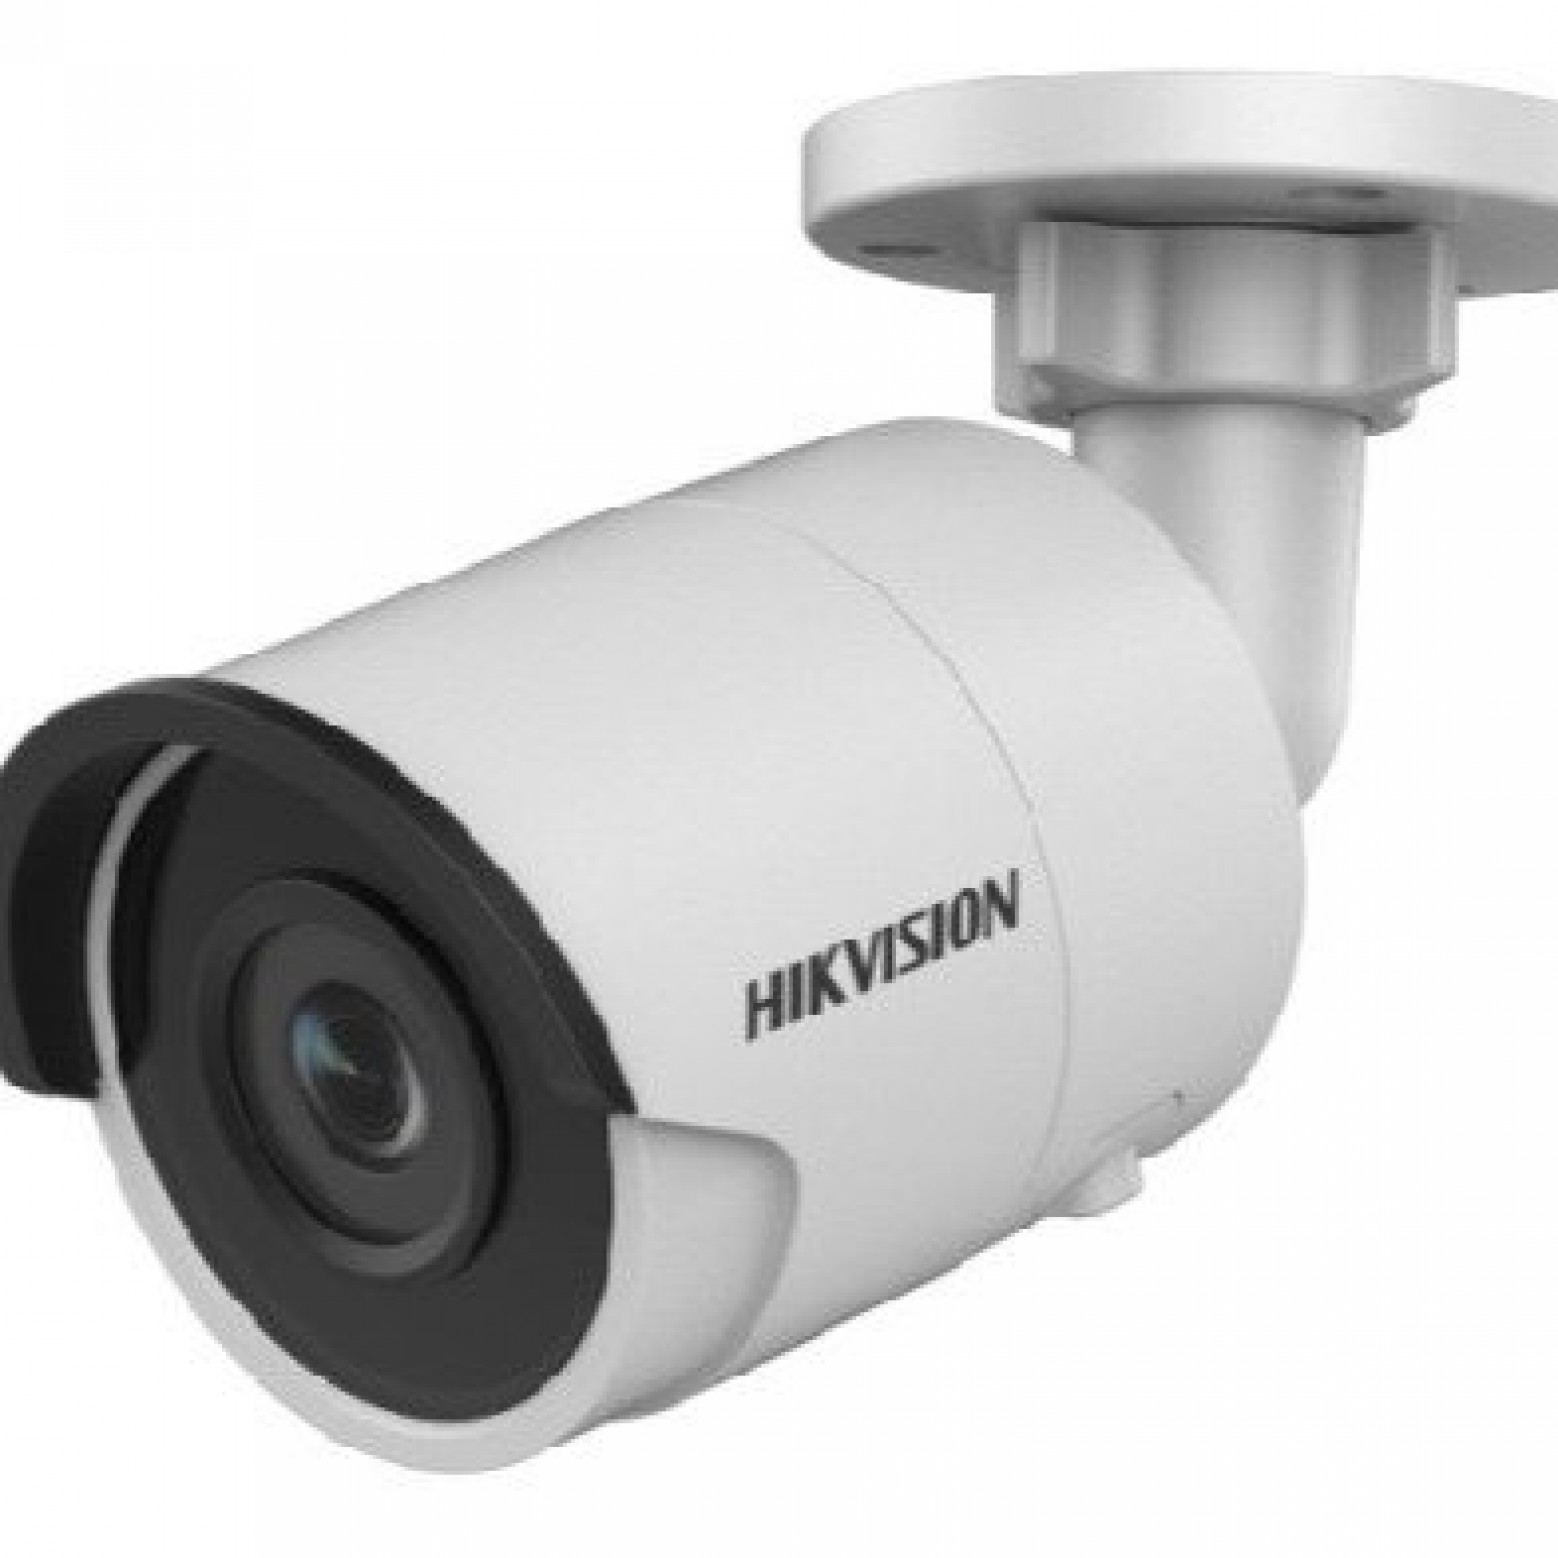 Hikvision DS-2CD2023G0-I Budgetlijn, Bullet Camera, 2MP, WDR, IR